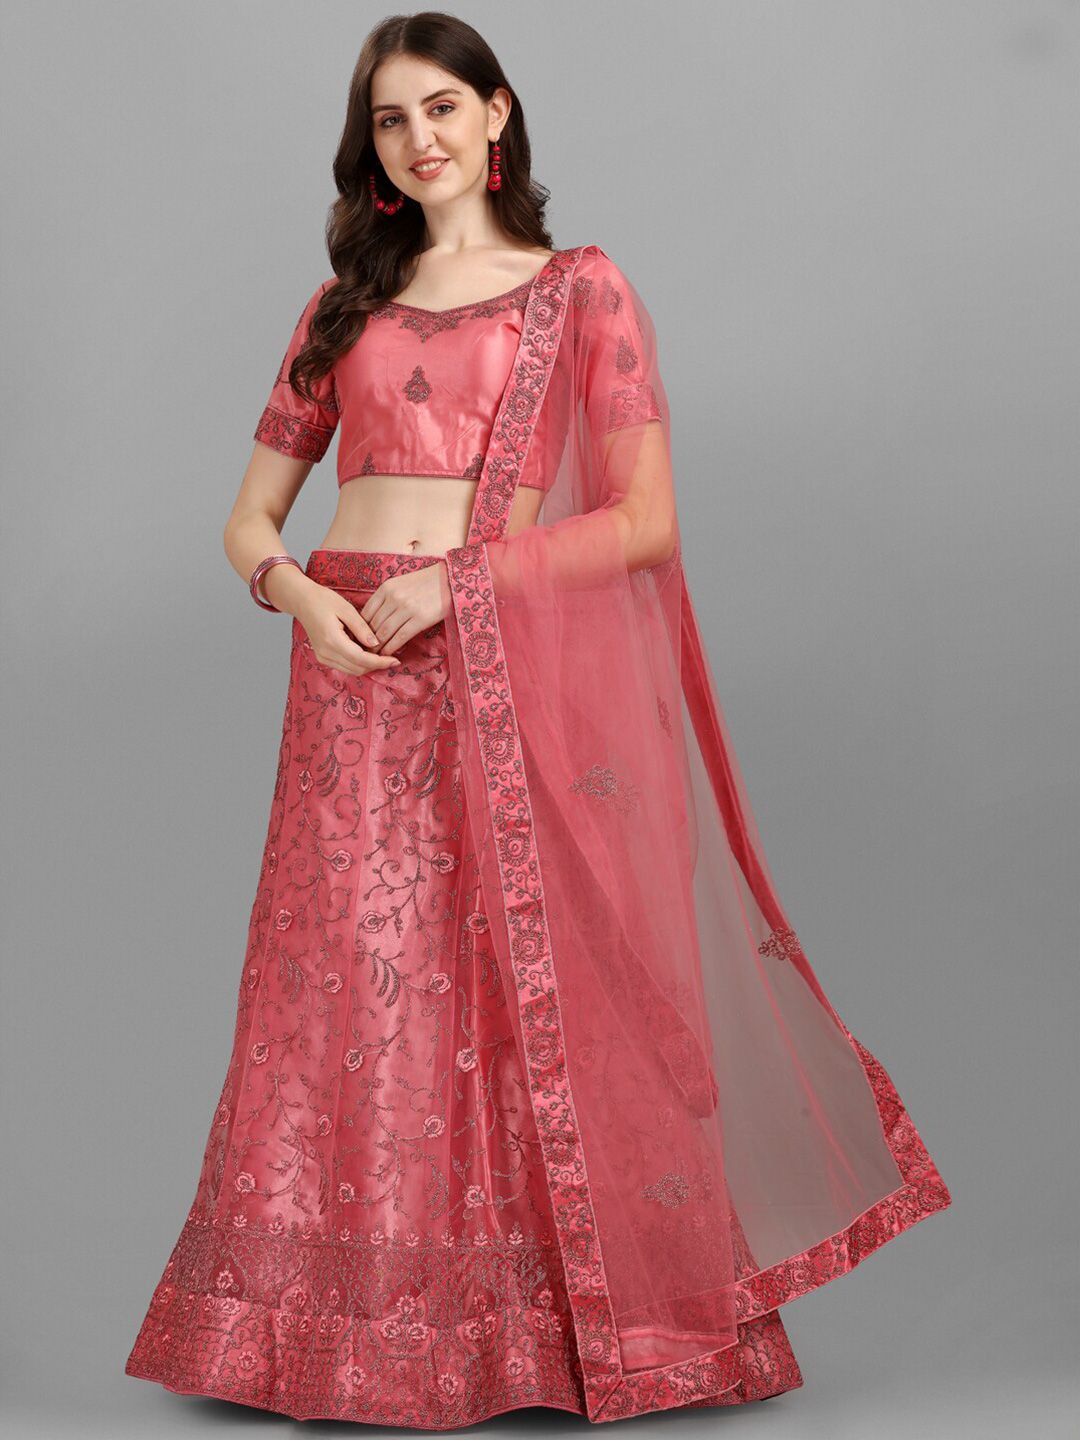 LABEL AARNA Pink & Silver-Toned Embellished Semi-Stitched Lehenga Choli Price in India